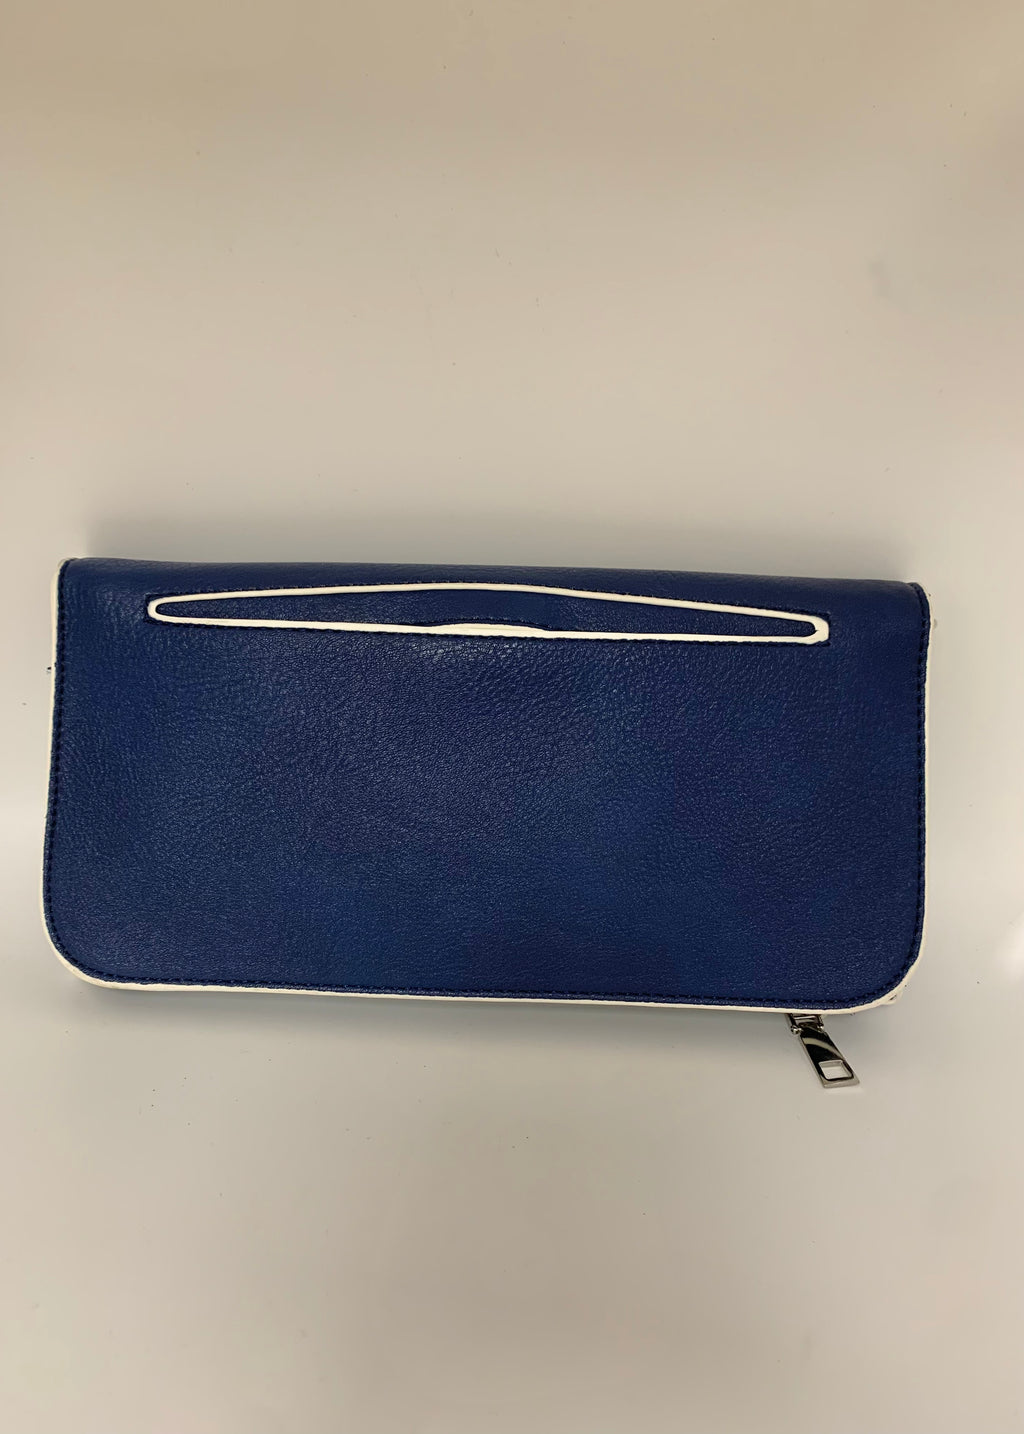 Navy Blue Handbag & Clutch